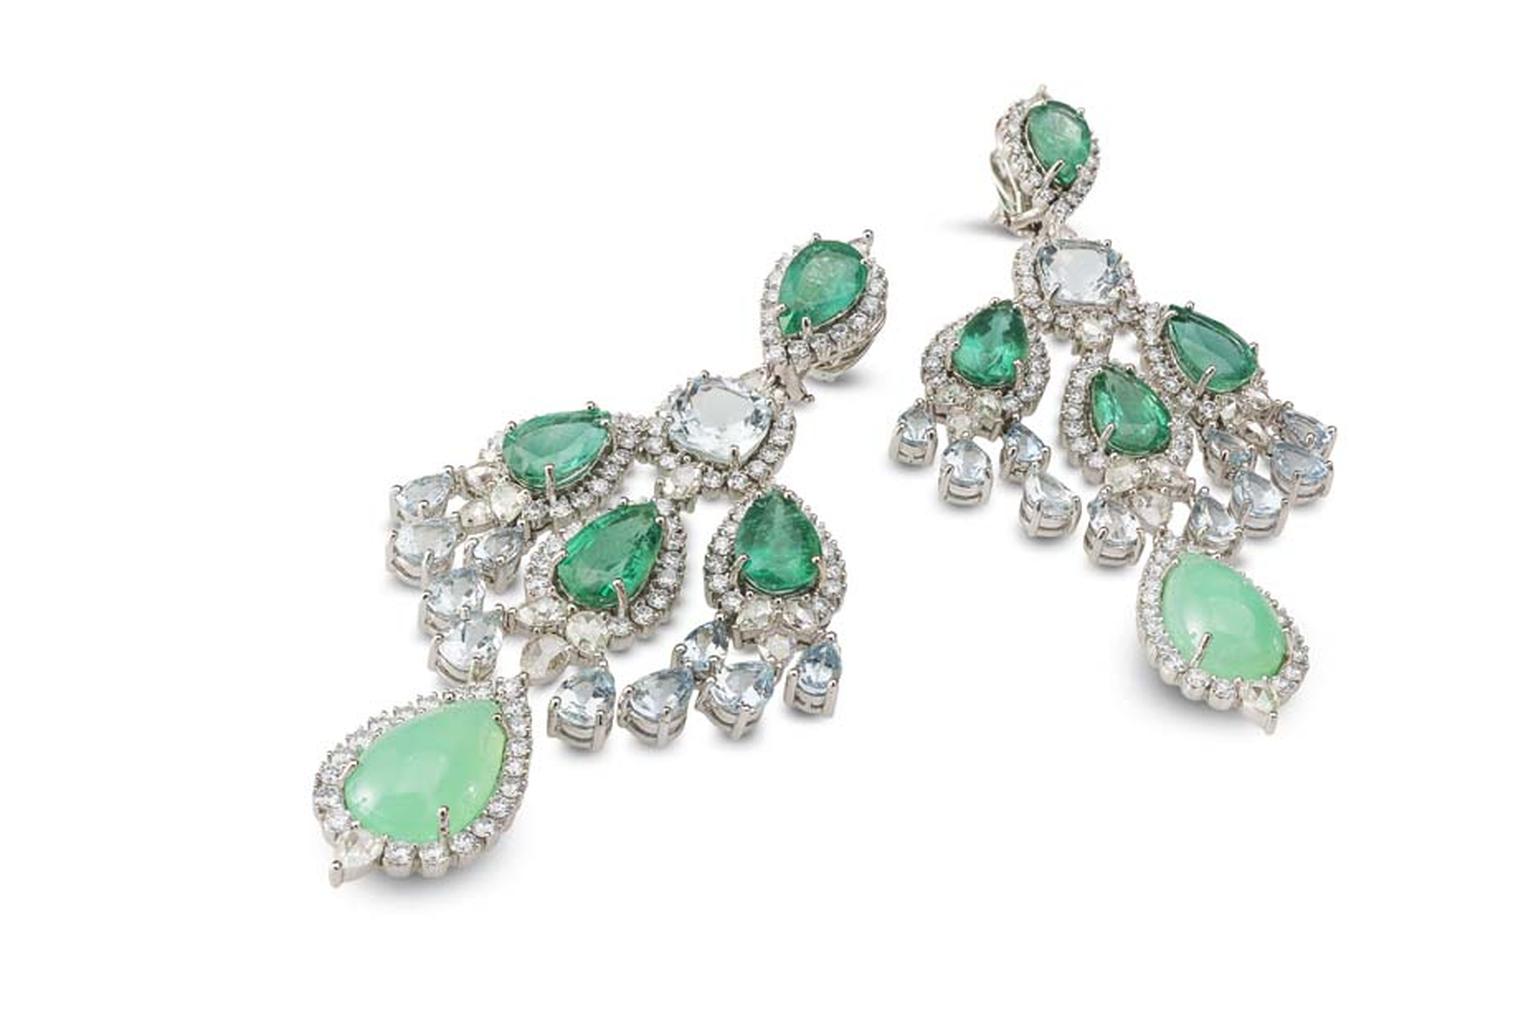 Farah Khan gold earrings featuring diamonds (11.03ct), chrysoprase (14.98ct), aquamarine (15.44ct) and emeralds (22.91ct).